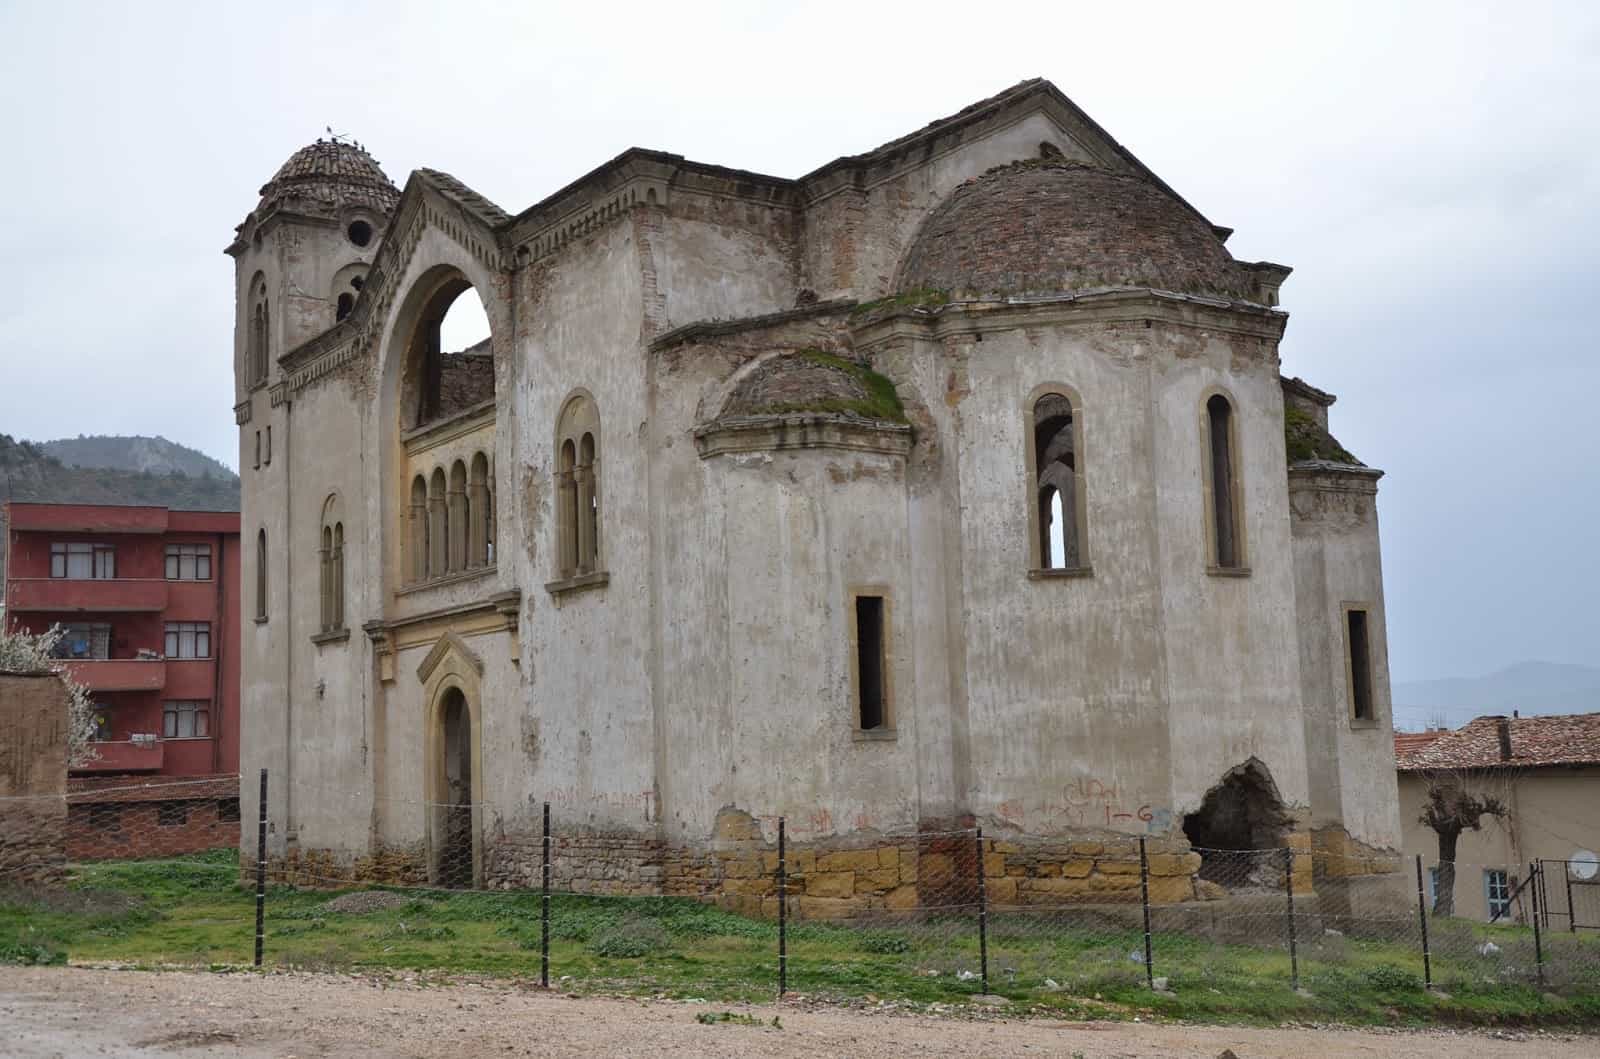 St. George Church in Osmaneli, Turkey